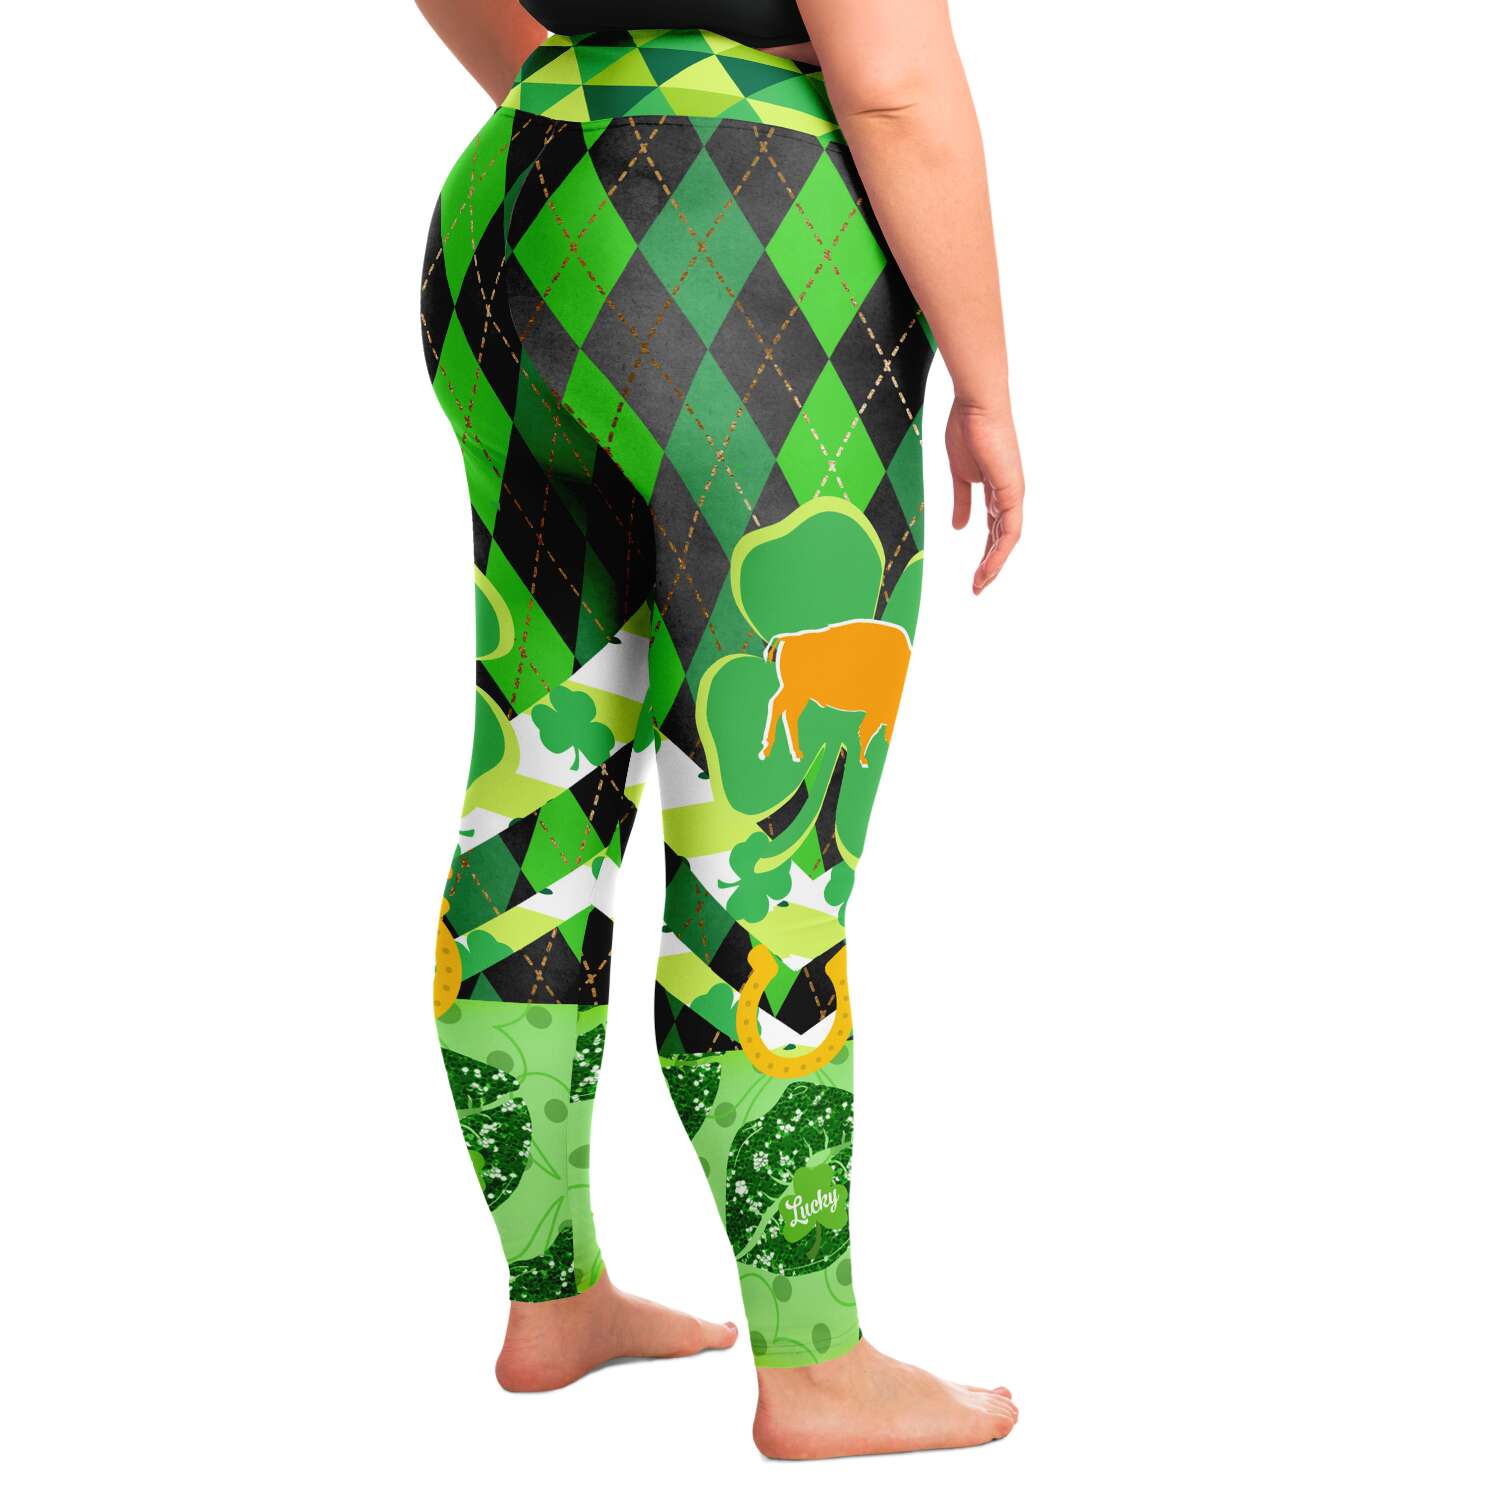 Curvy St Patricks Day Yoga pants Plus size 2XL -6XL – Timber Lady Designs